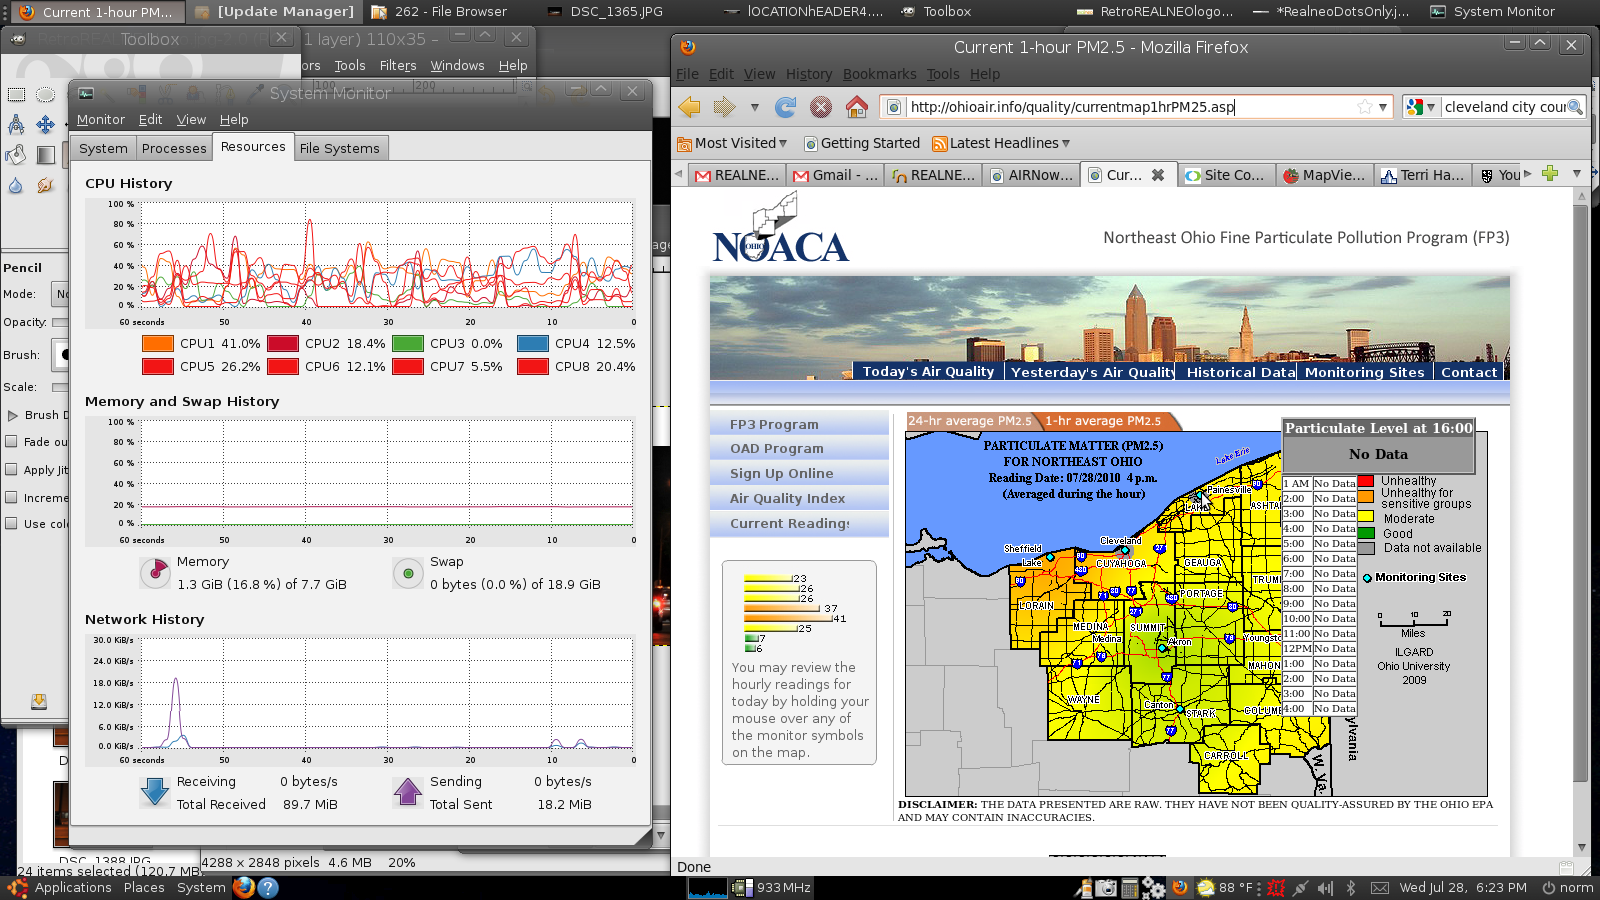 NOACA EPA Air Quality Monitoring for Painesville, Ohio - BROKEN